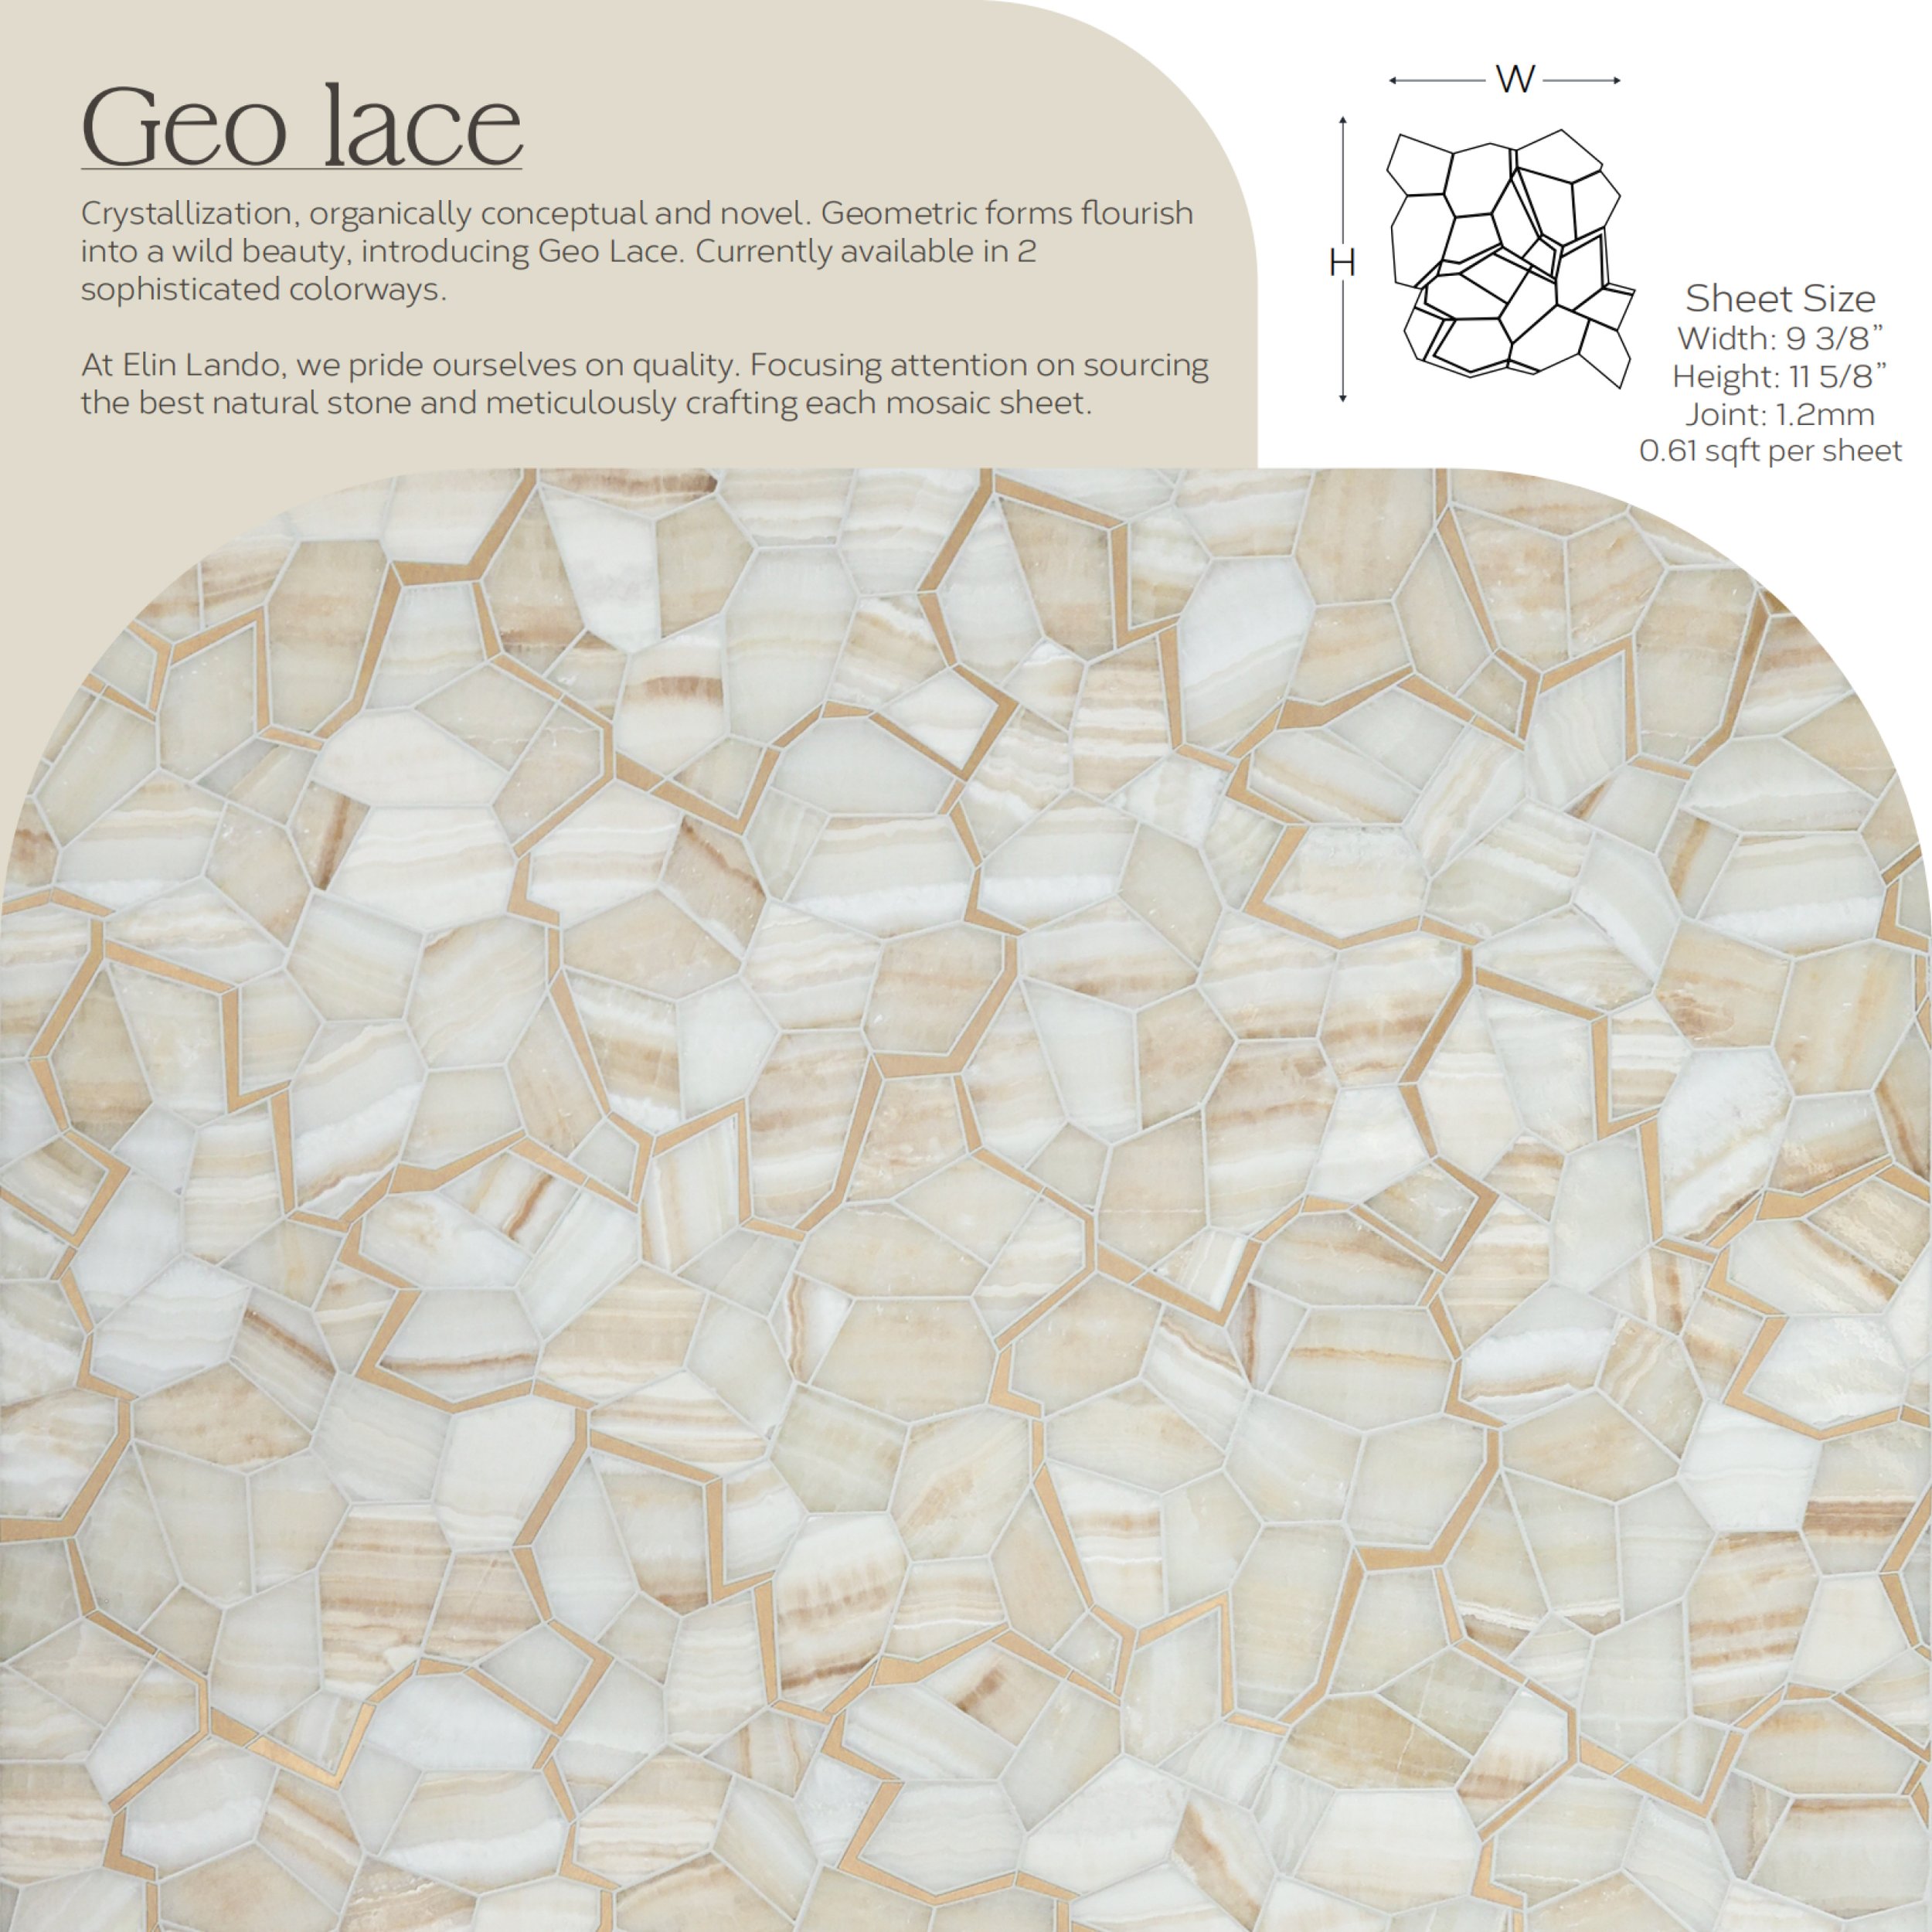 Geo lace-1 thumbnail.jpg